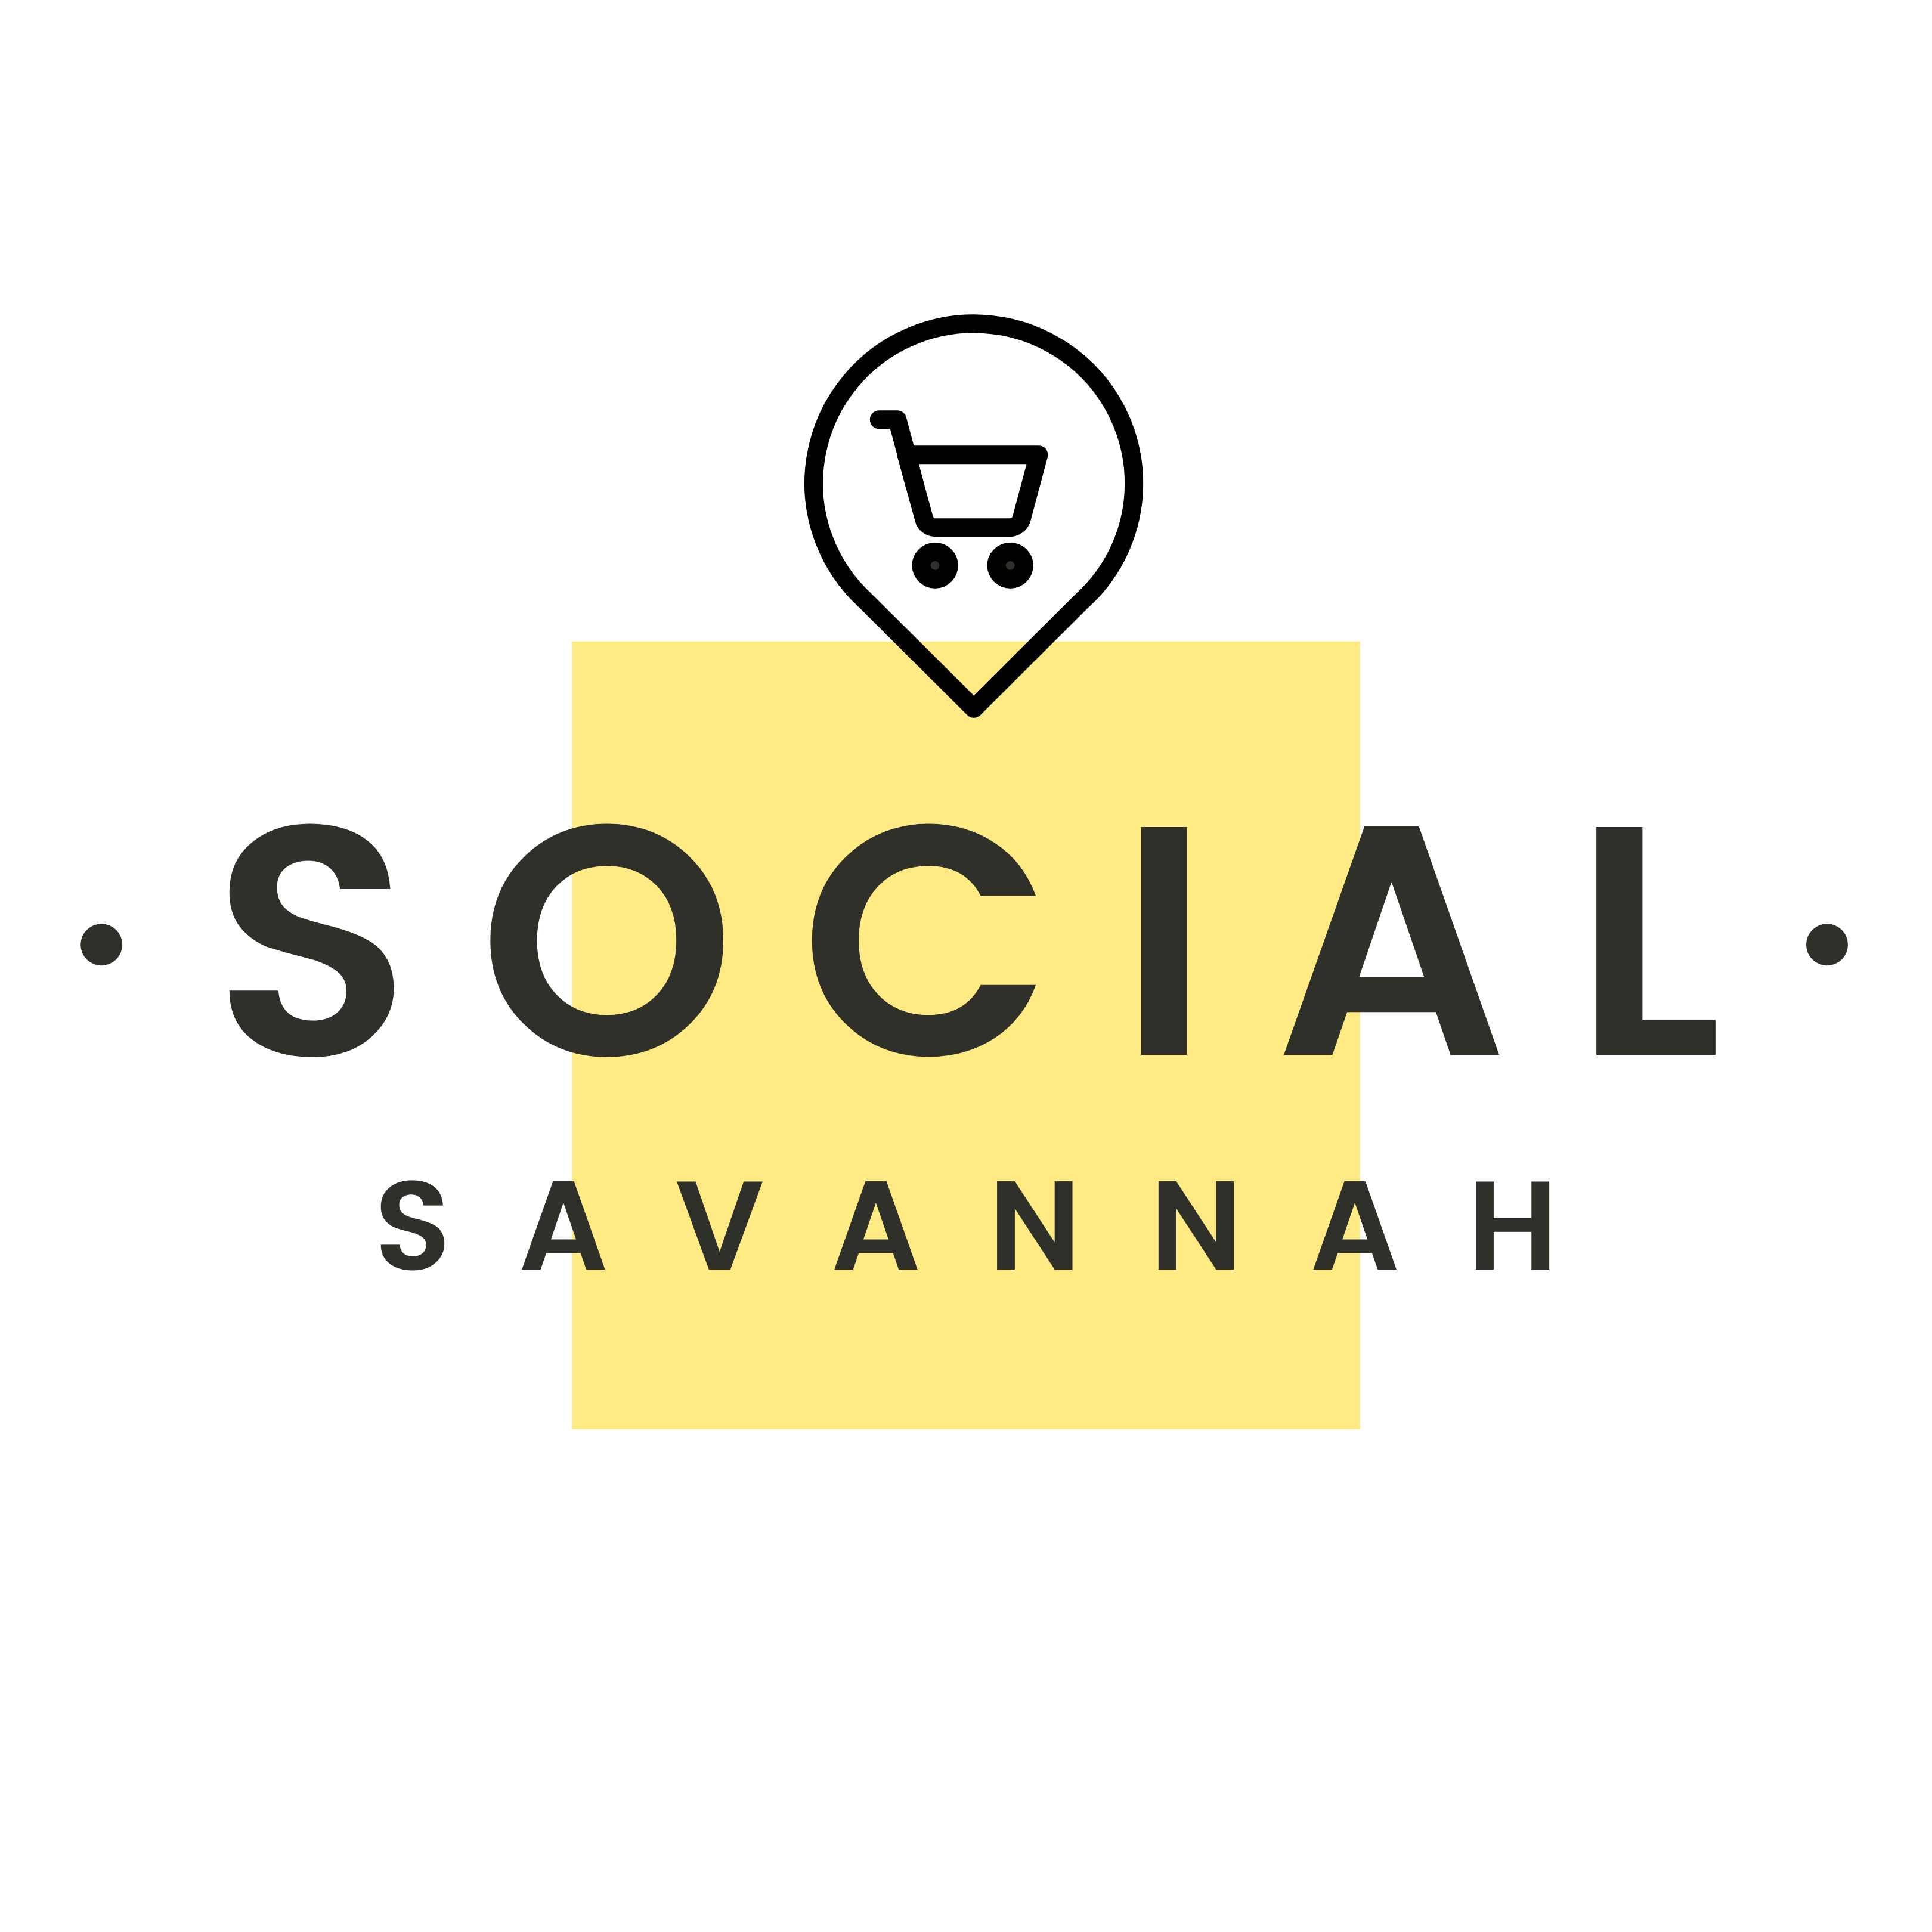 The UGC Creator Academy By Savannah Sanchez - Free Download Course - The Social Savannah